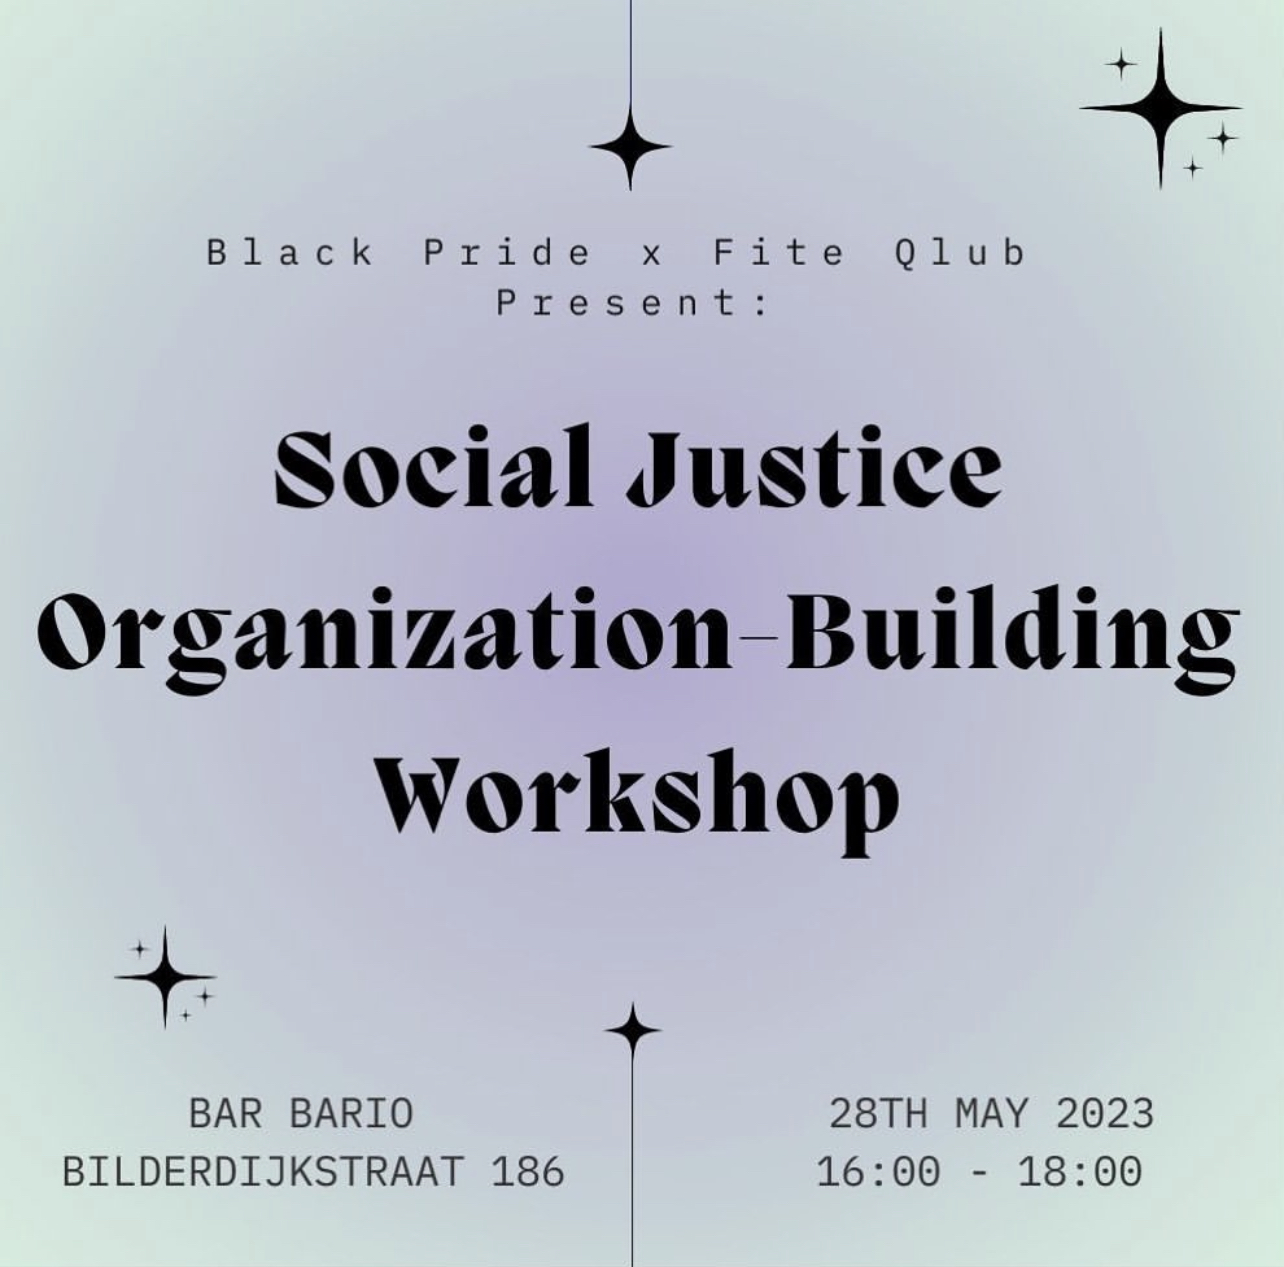 Social Justice Organization-Building Working 